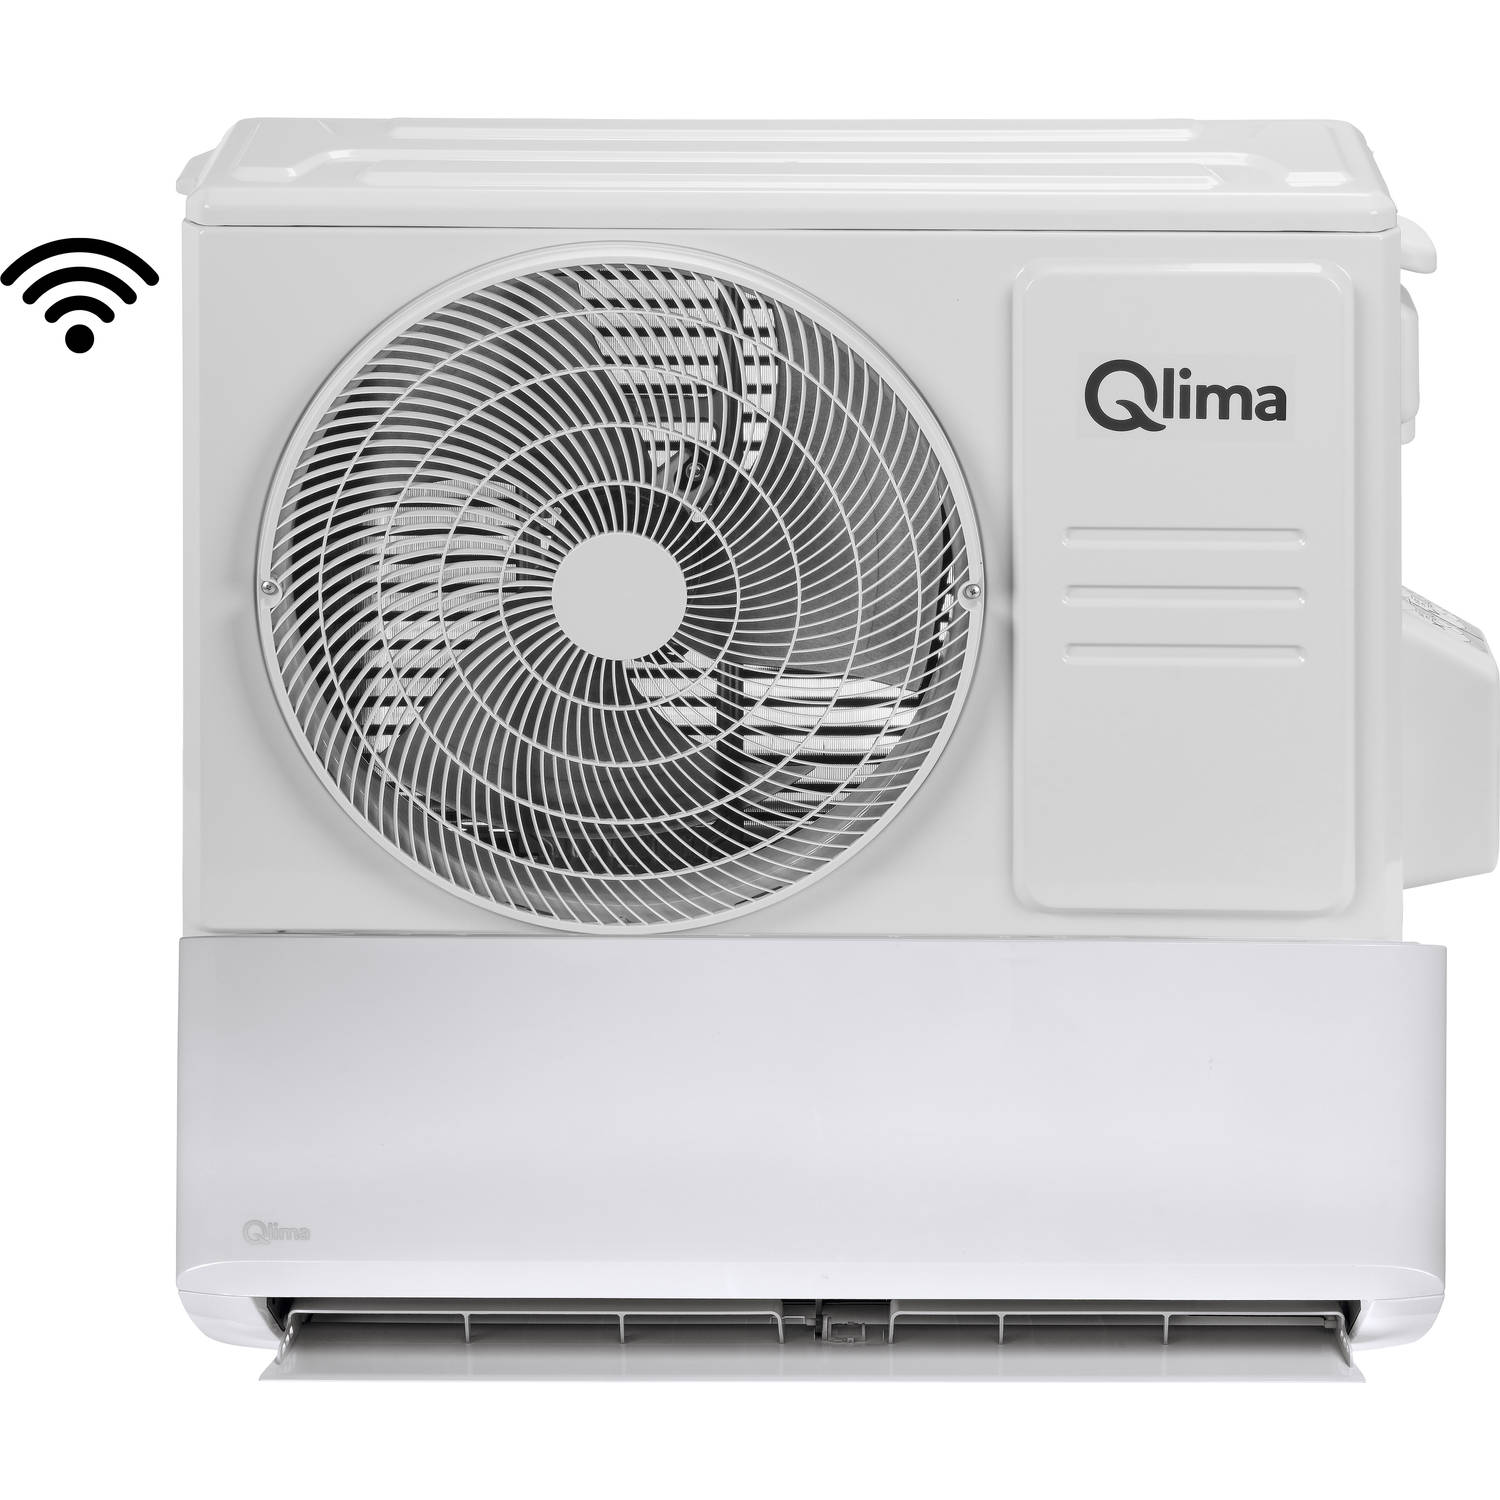 Qlima SC 6153 compleet (incl. installatie check) Split unit airco